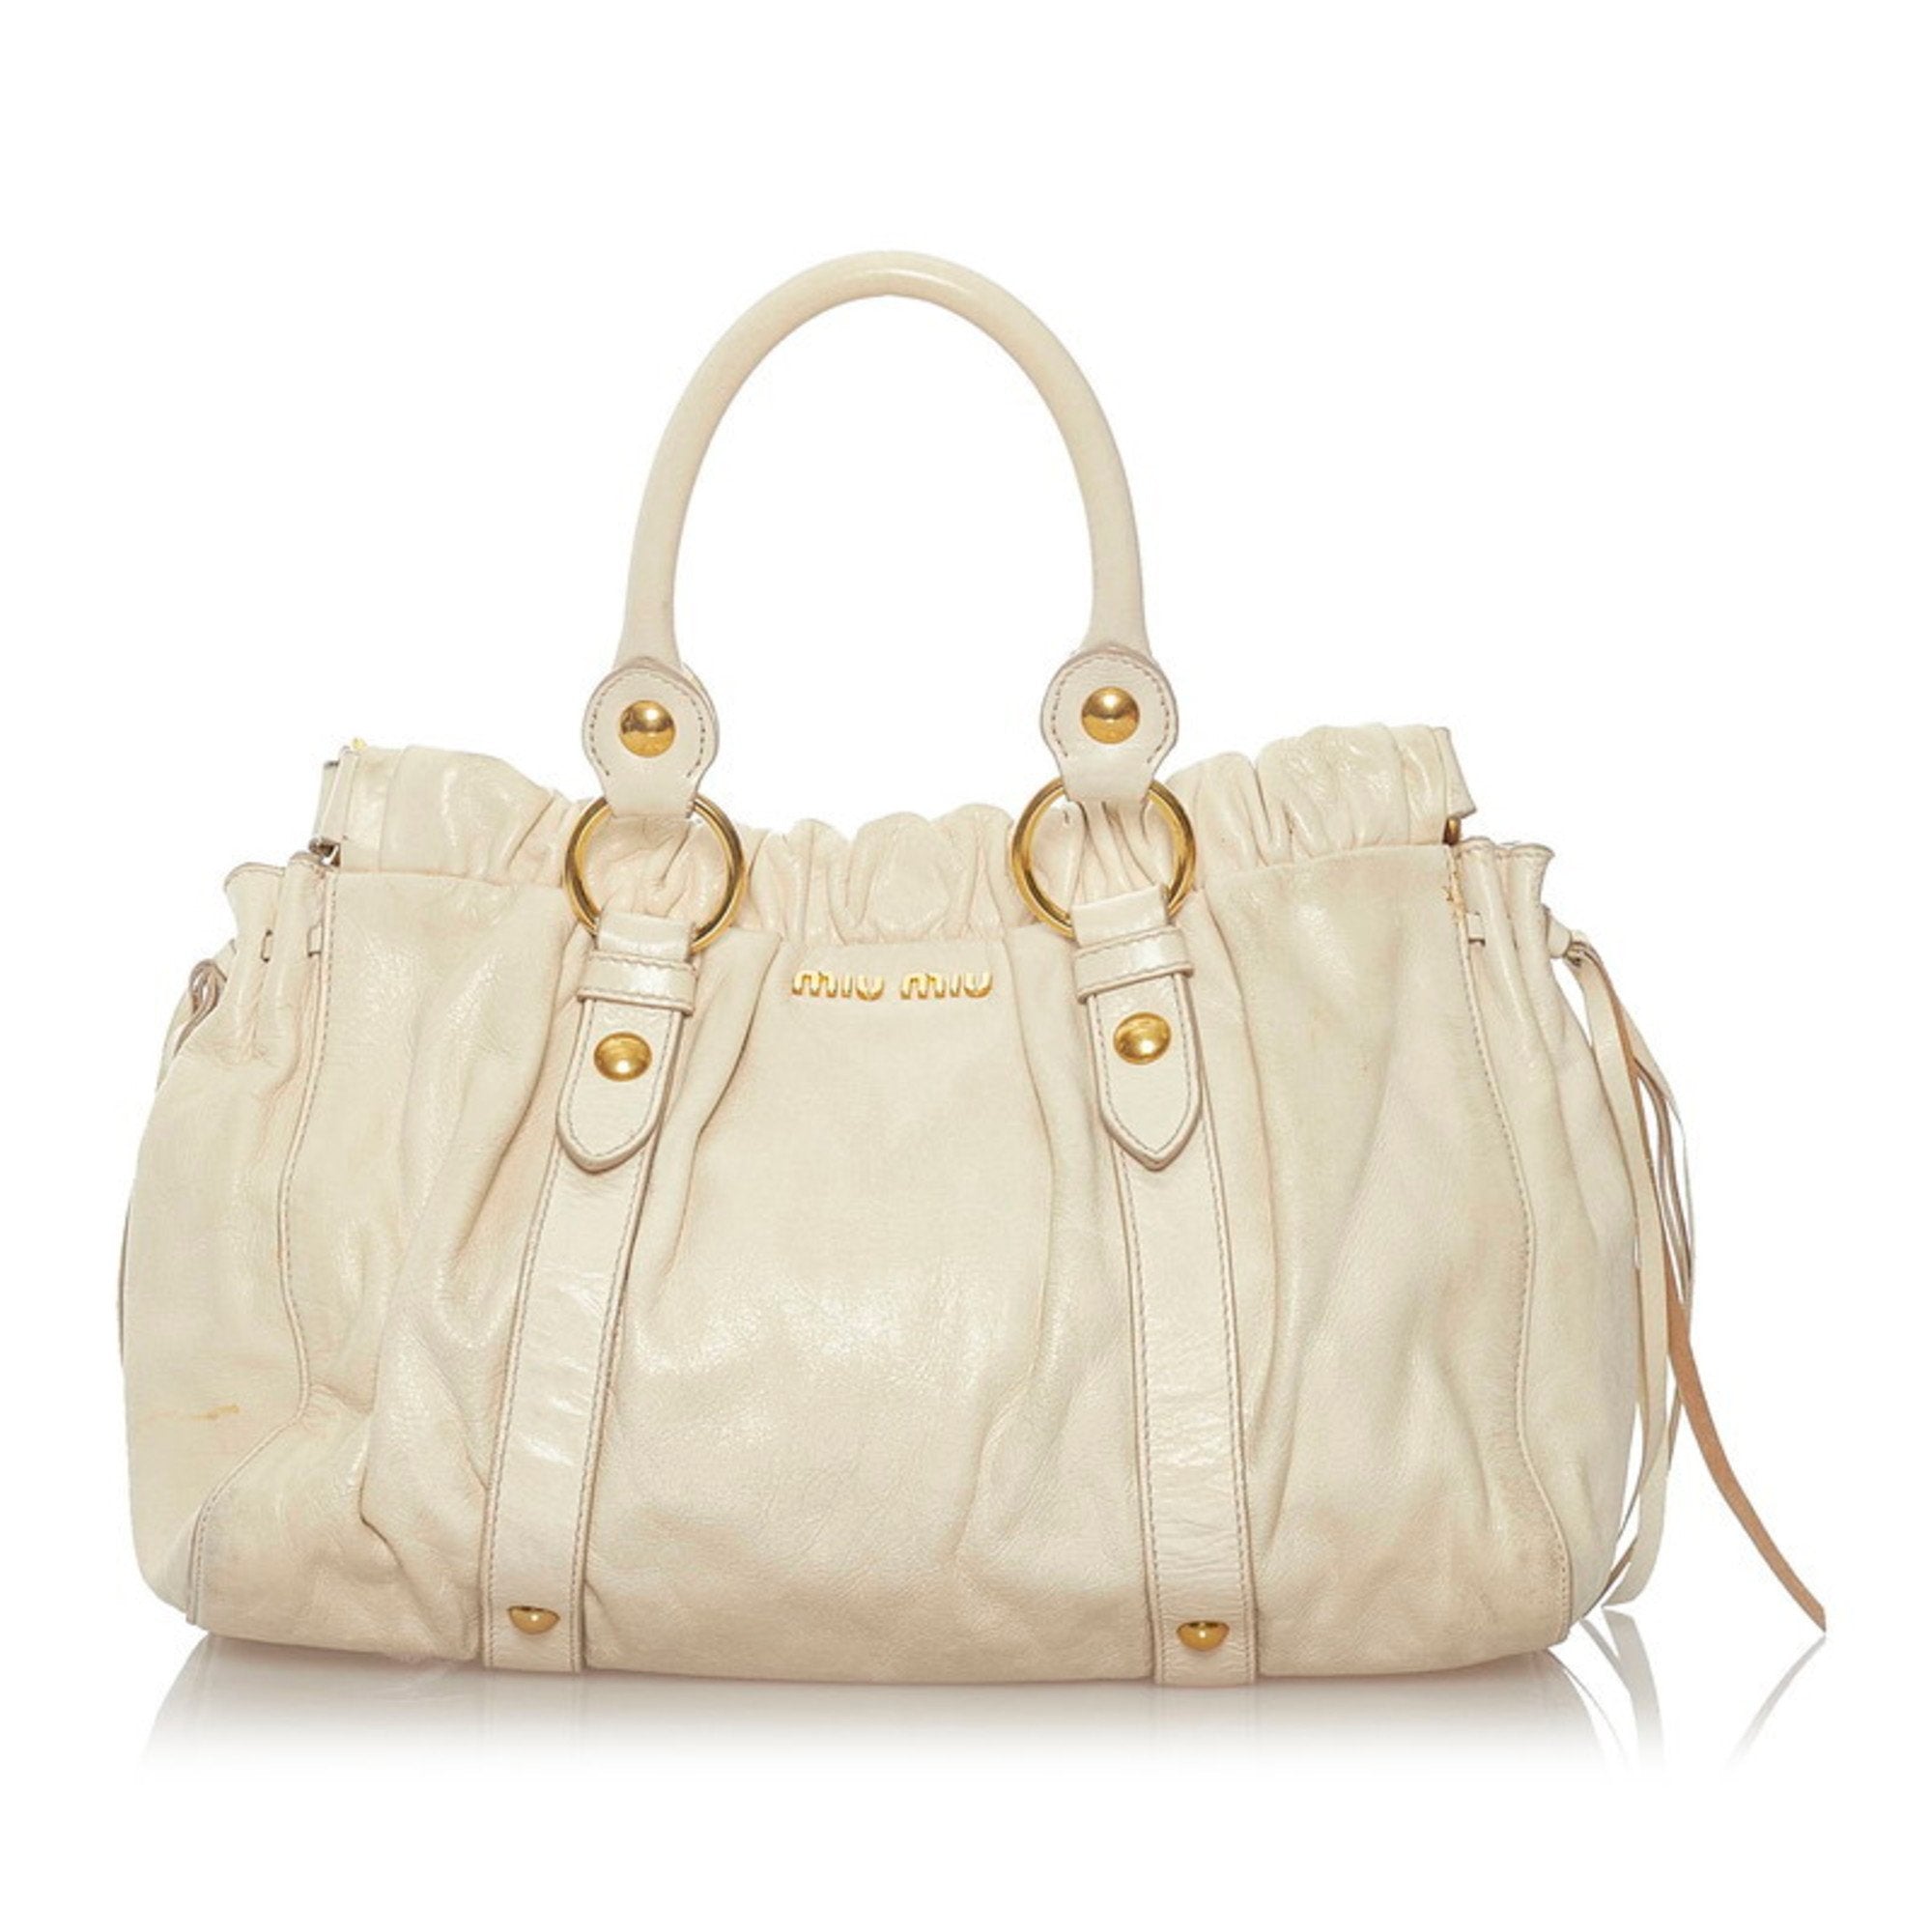 Miu Miu Miu handbag shoulder bag 2WAY white leather ladies MIUMIU